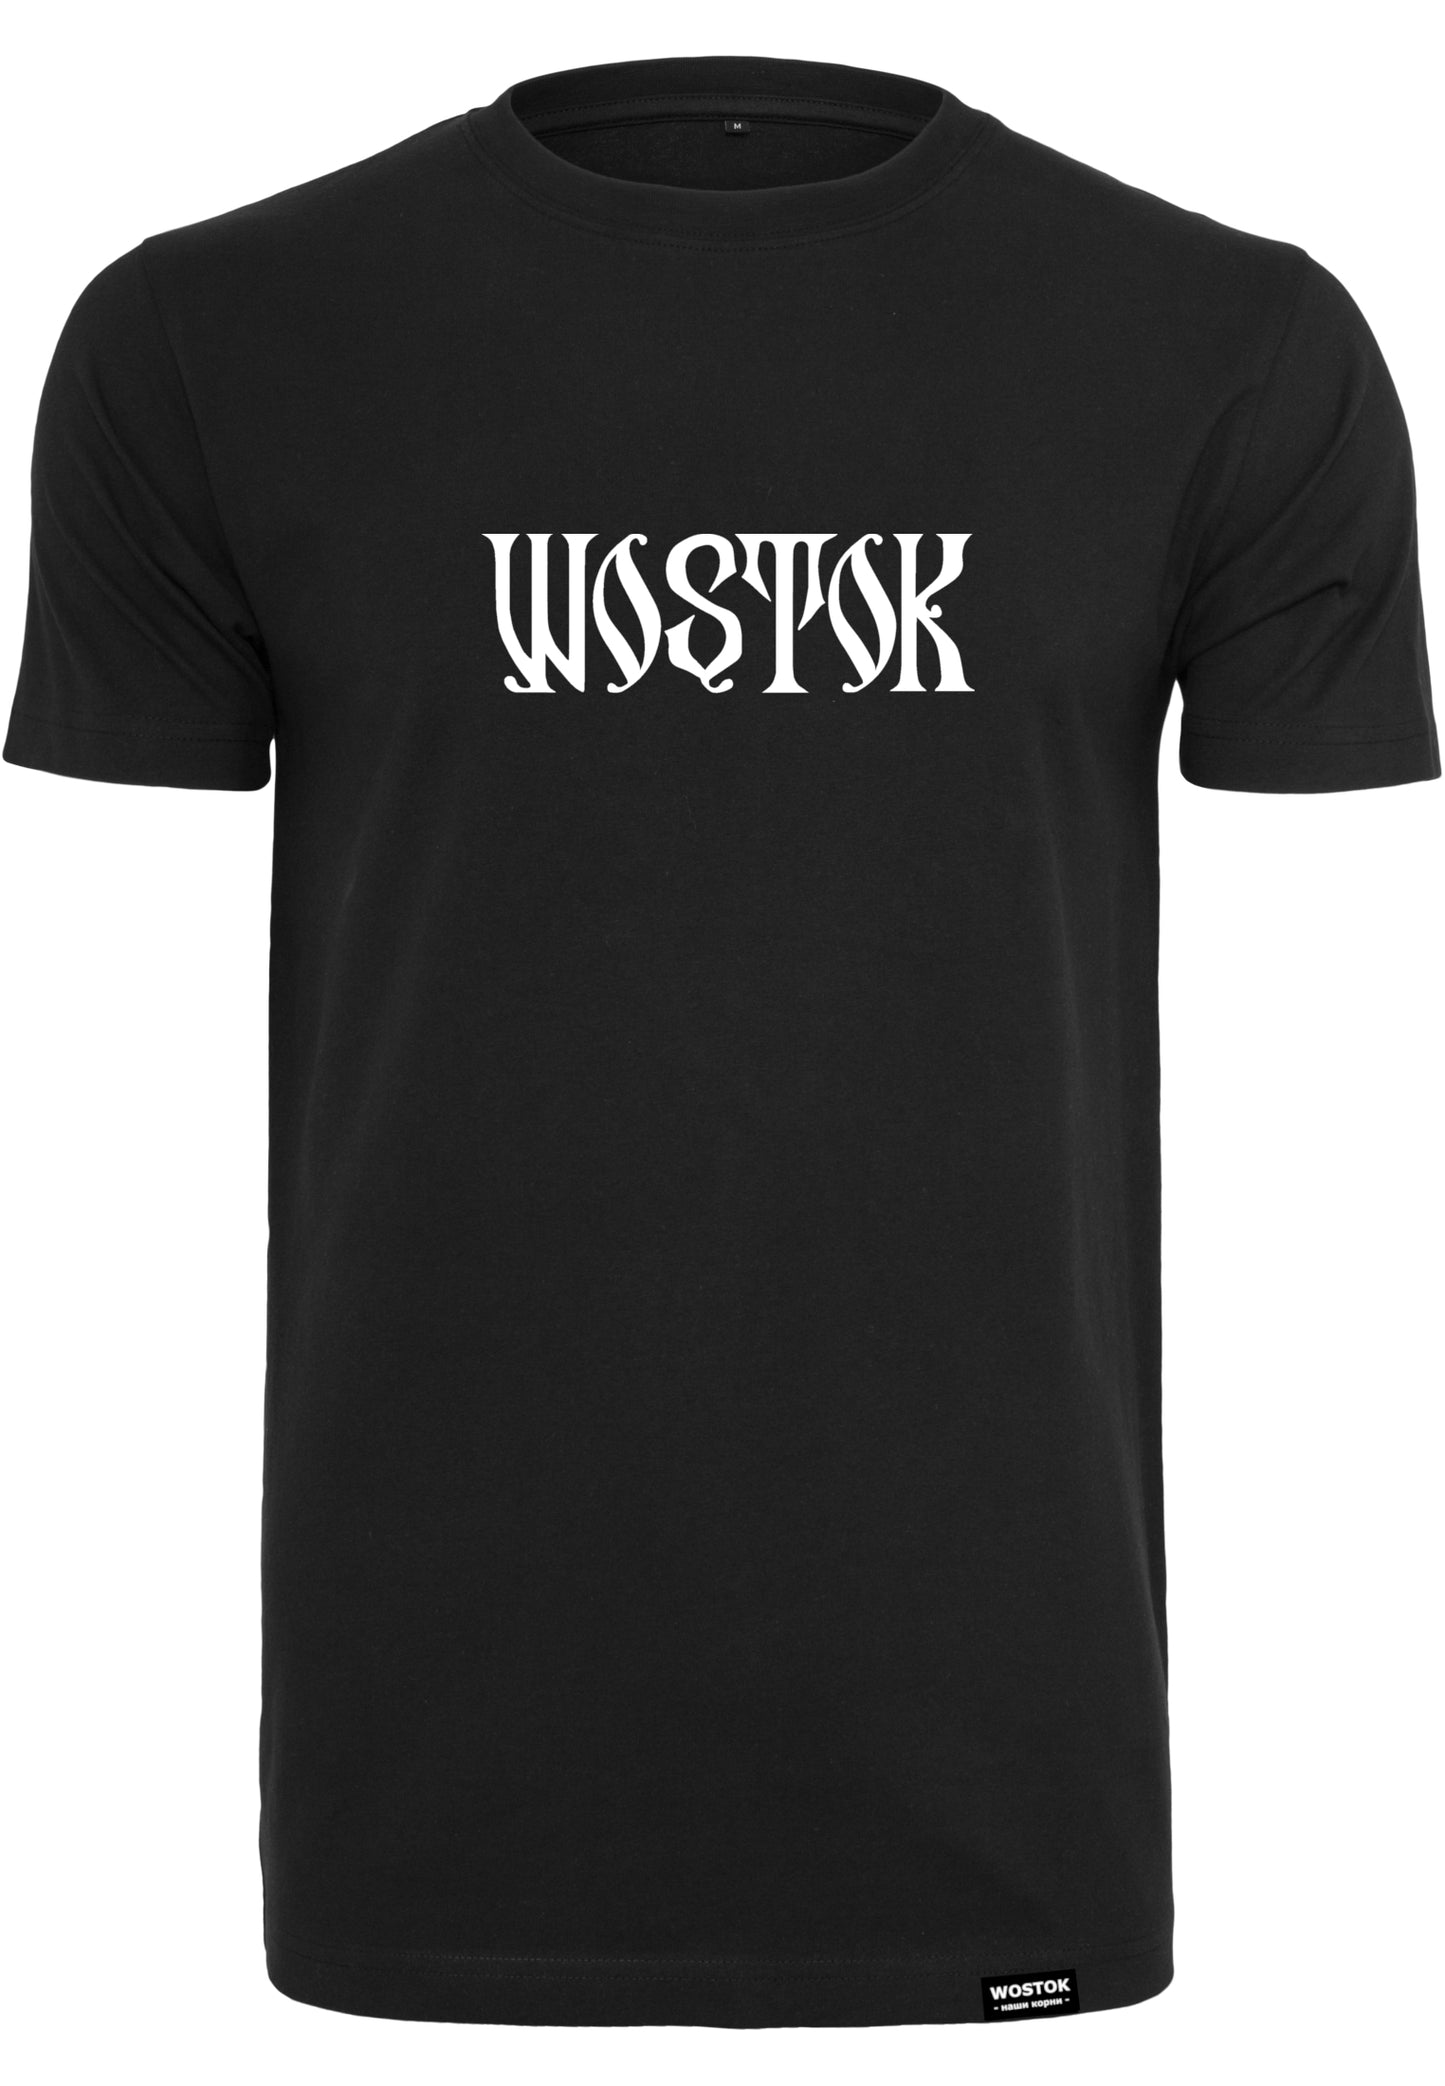 Slavic Wostok T-Shirt